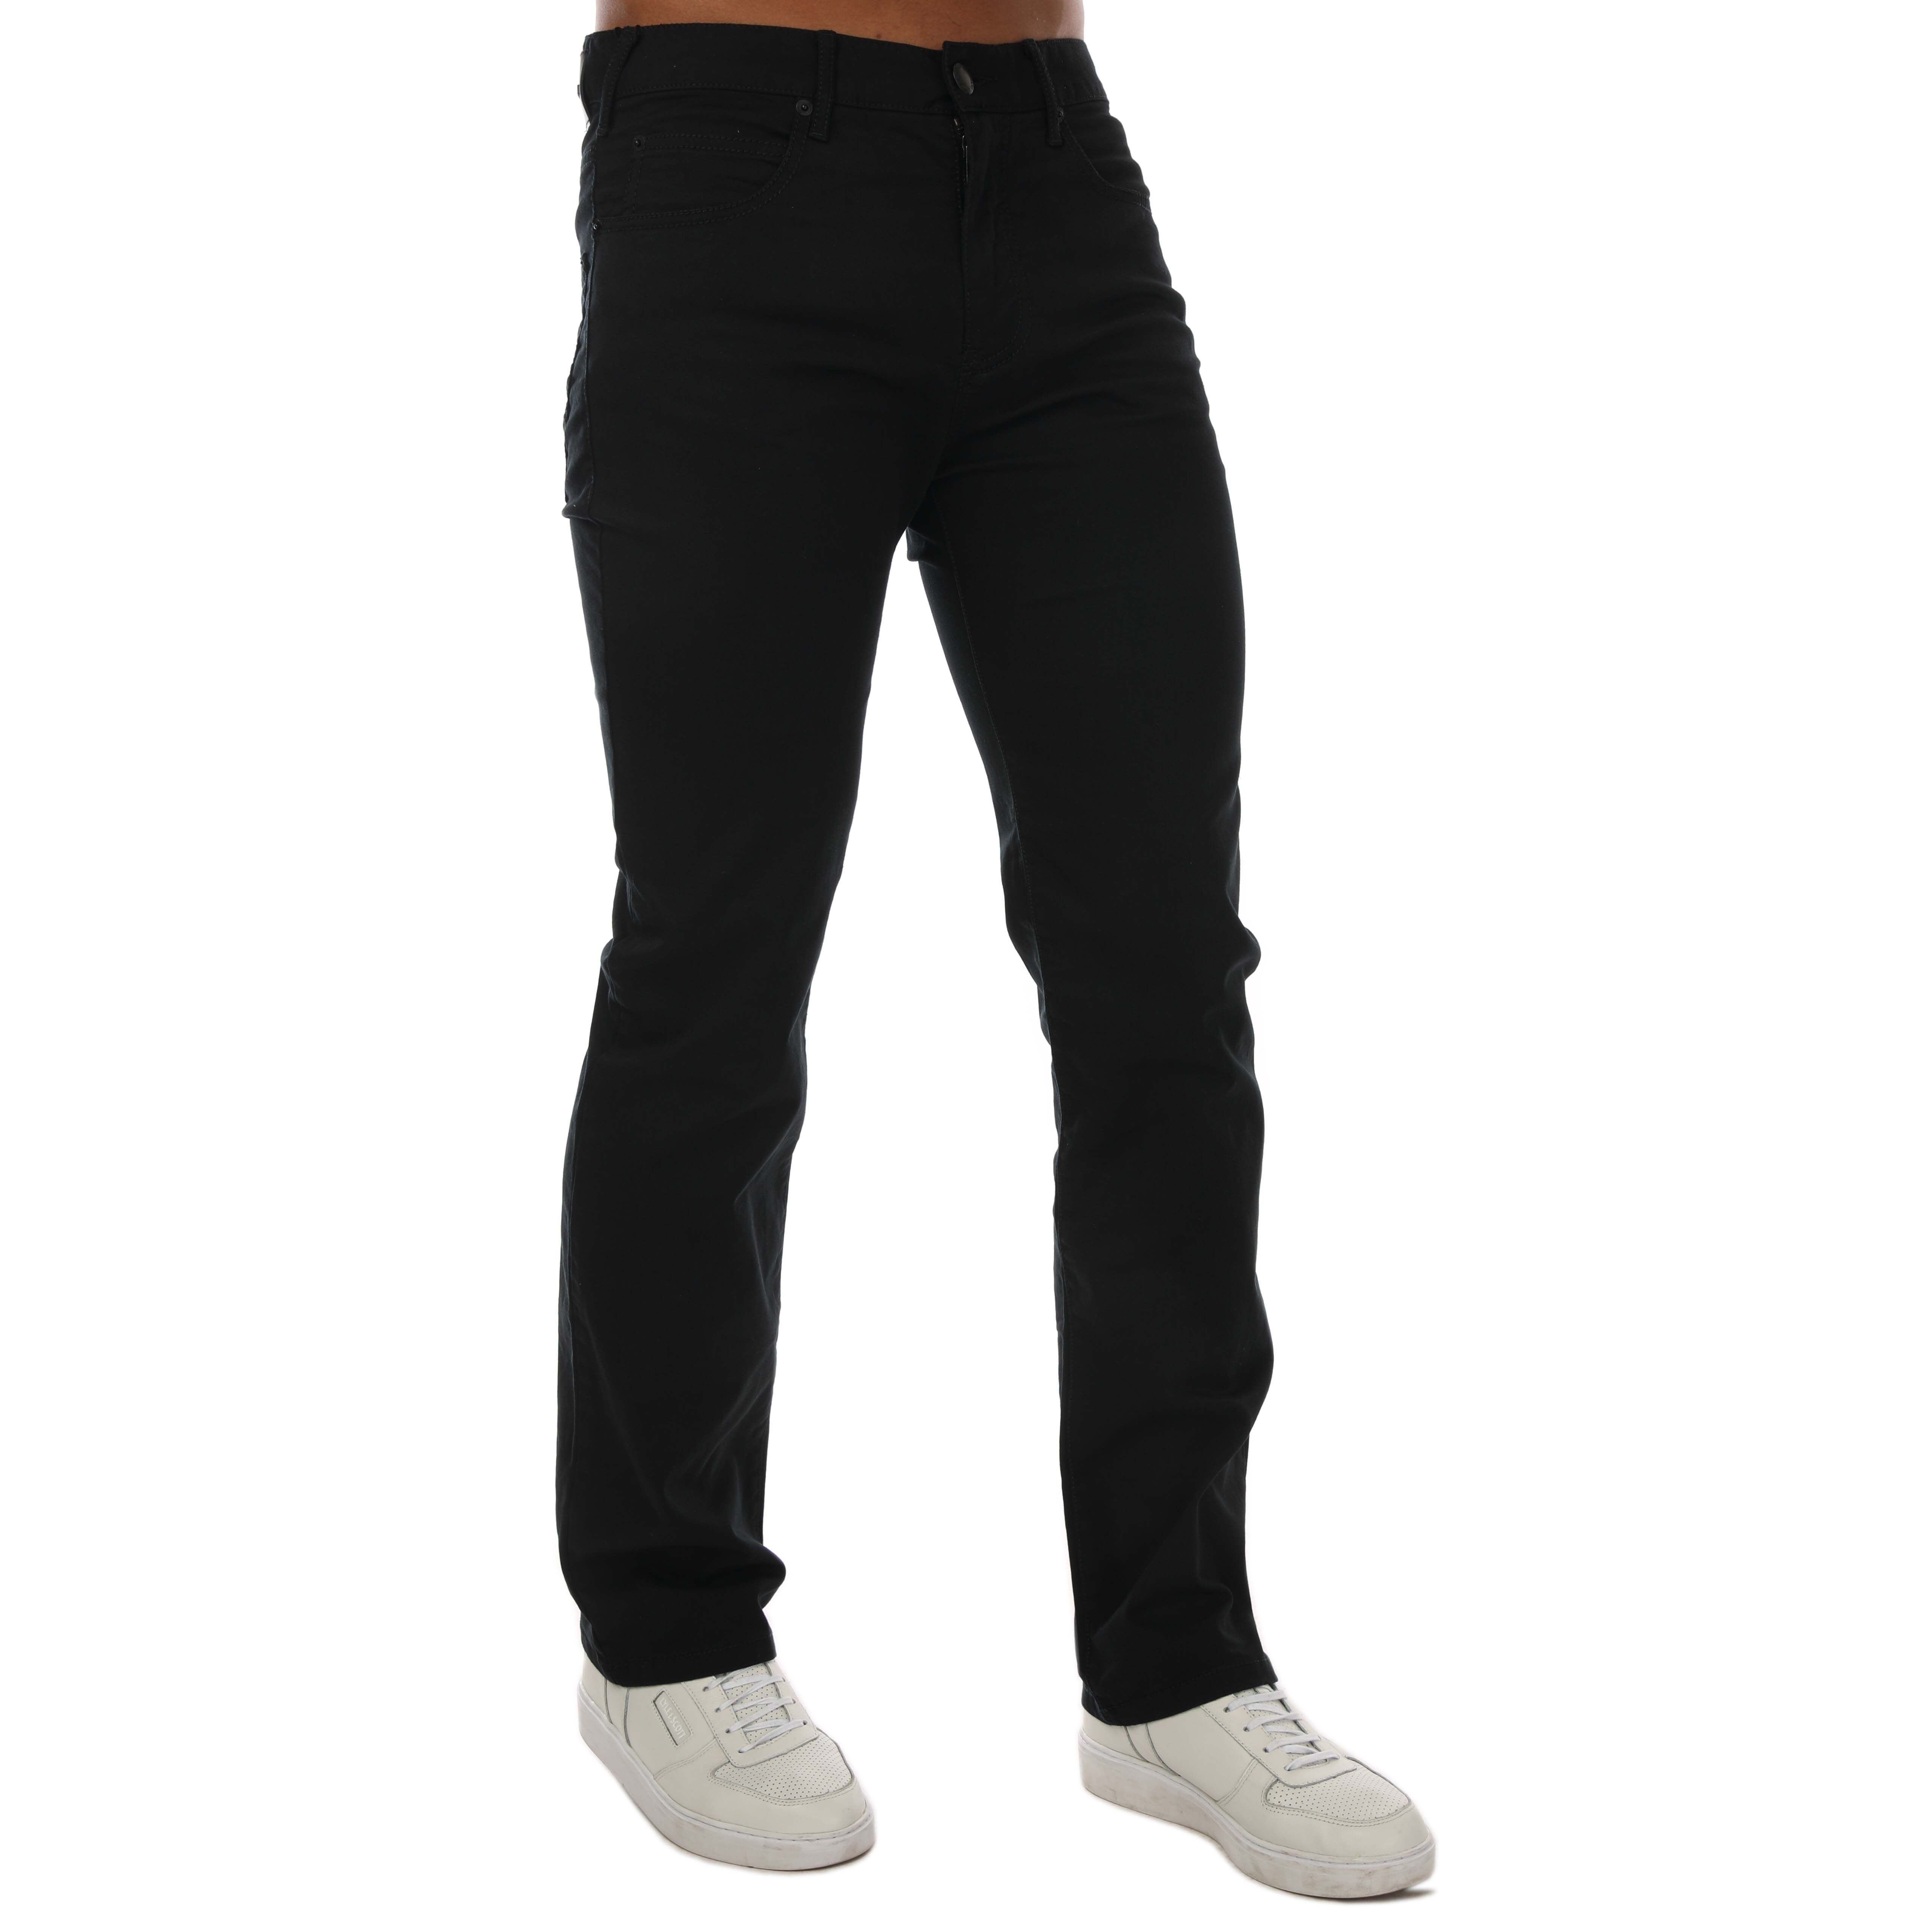 Buy BLACK SHADOW Men's Slim FIT Popcorn Armani Pant (34) Black at Amazon.in